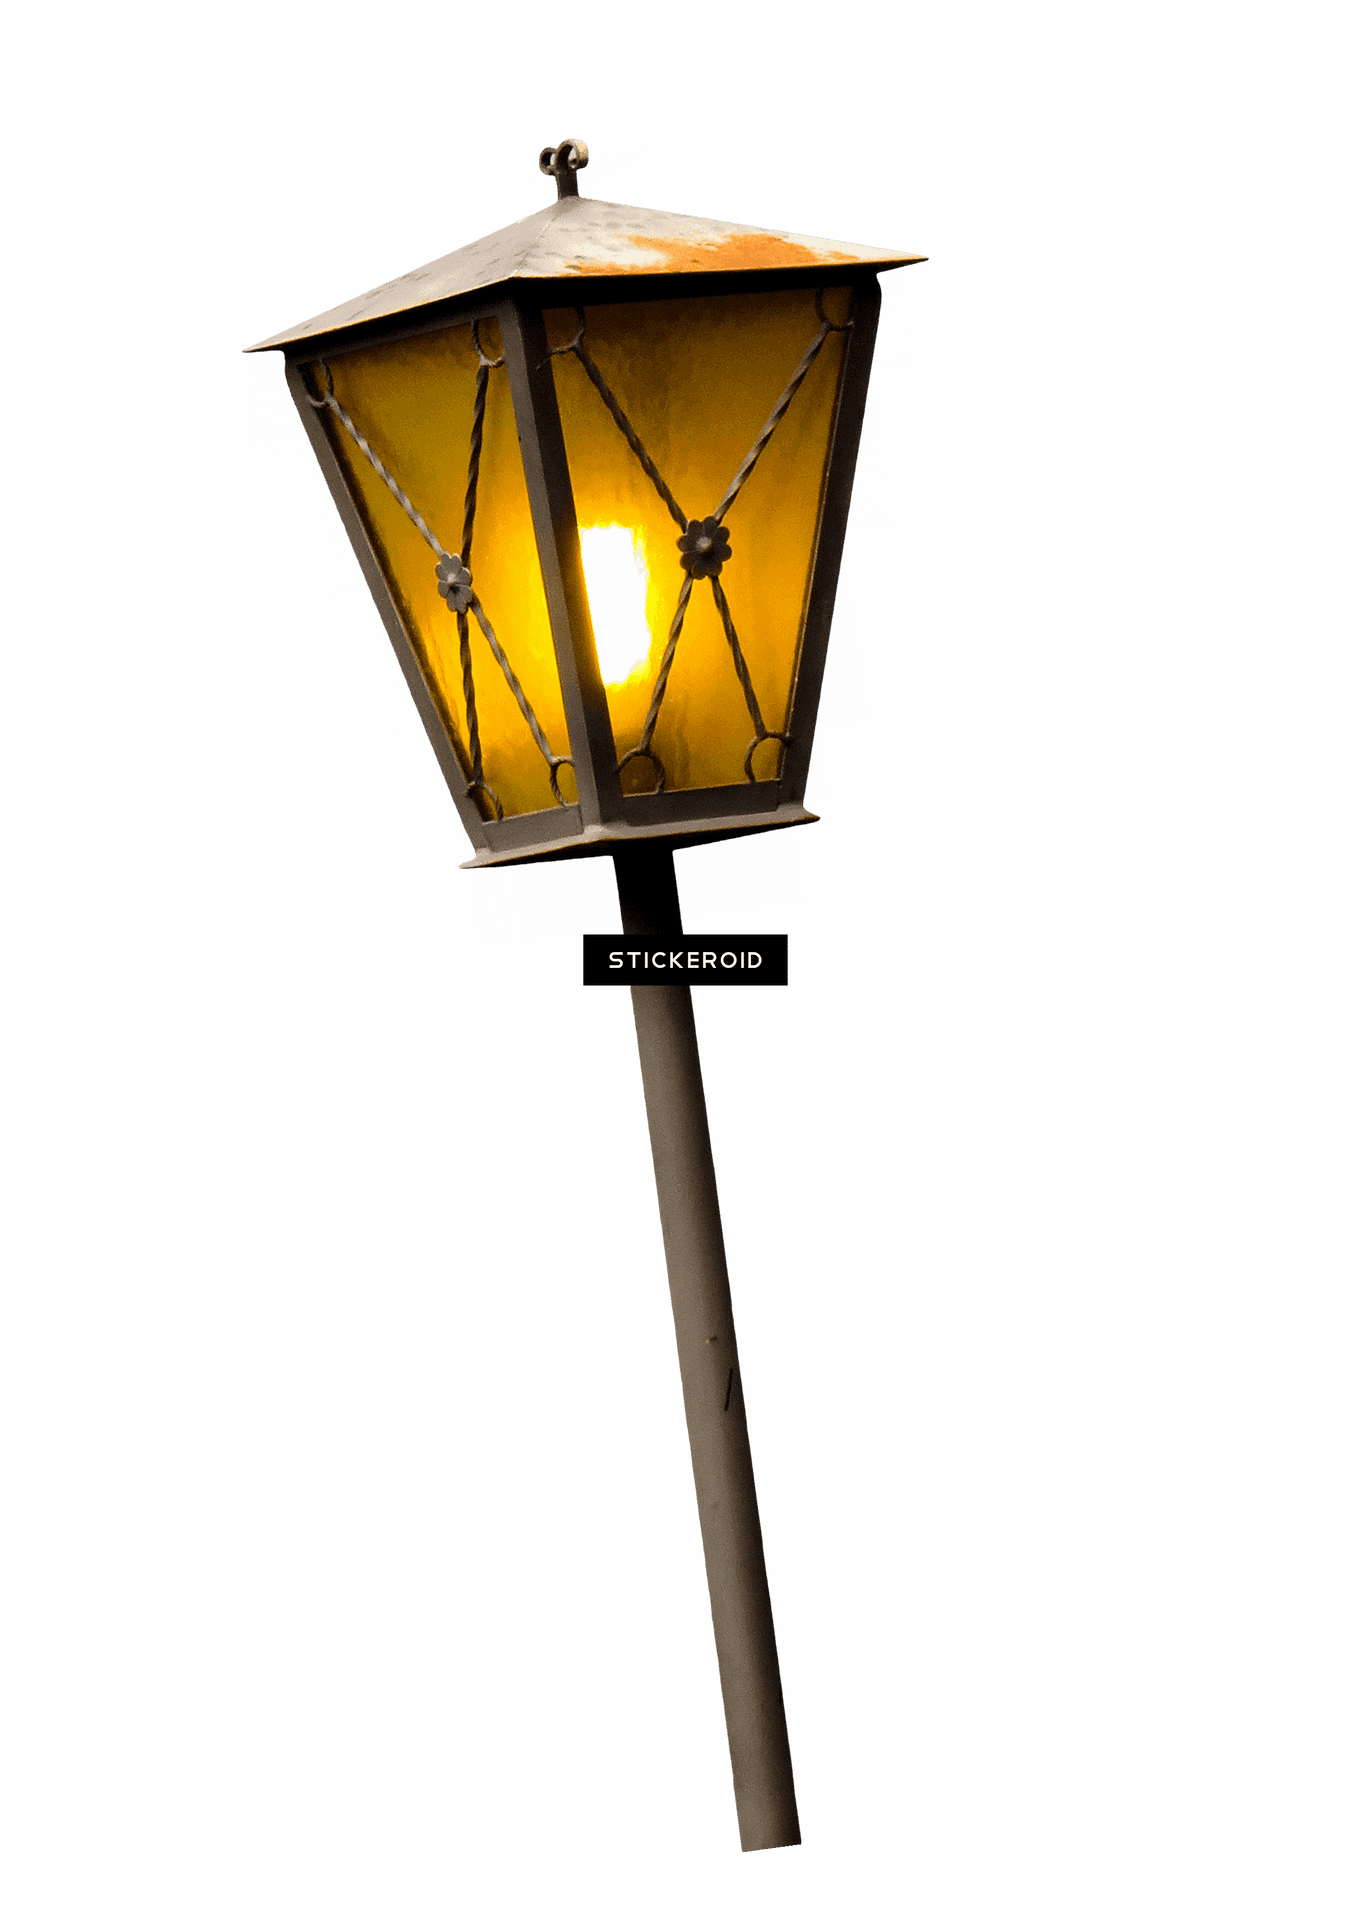 Vintage Style Street Lamp PNG image